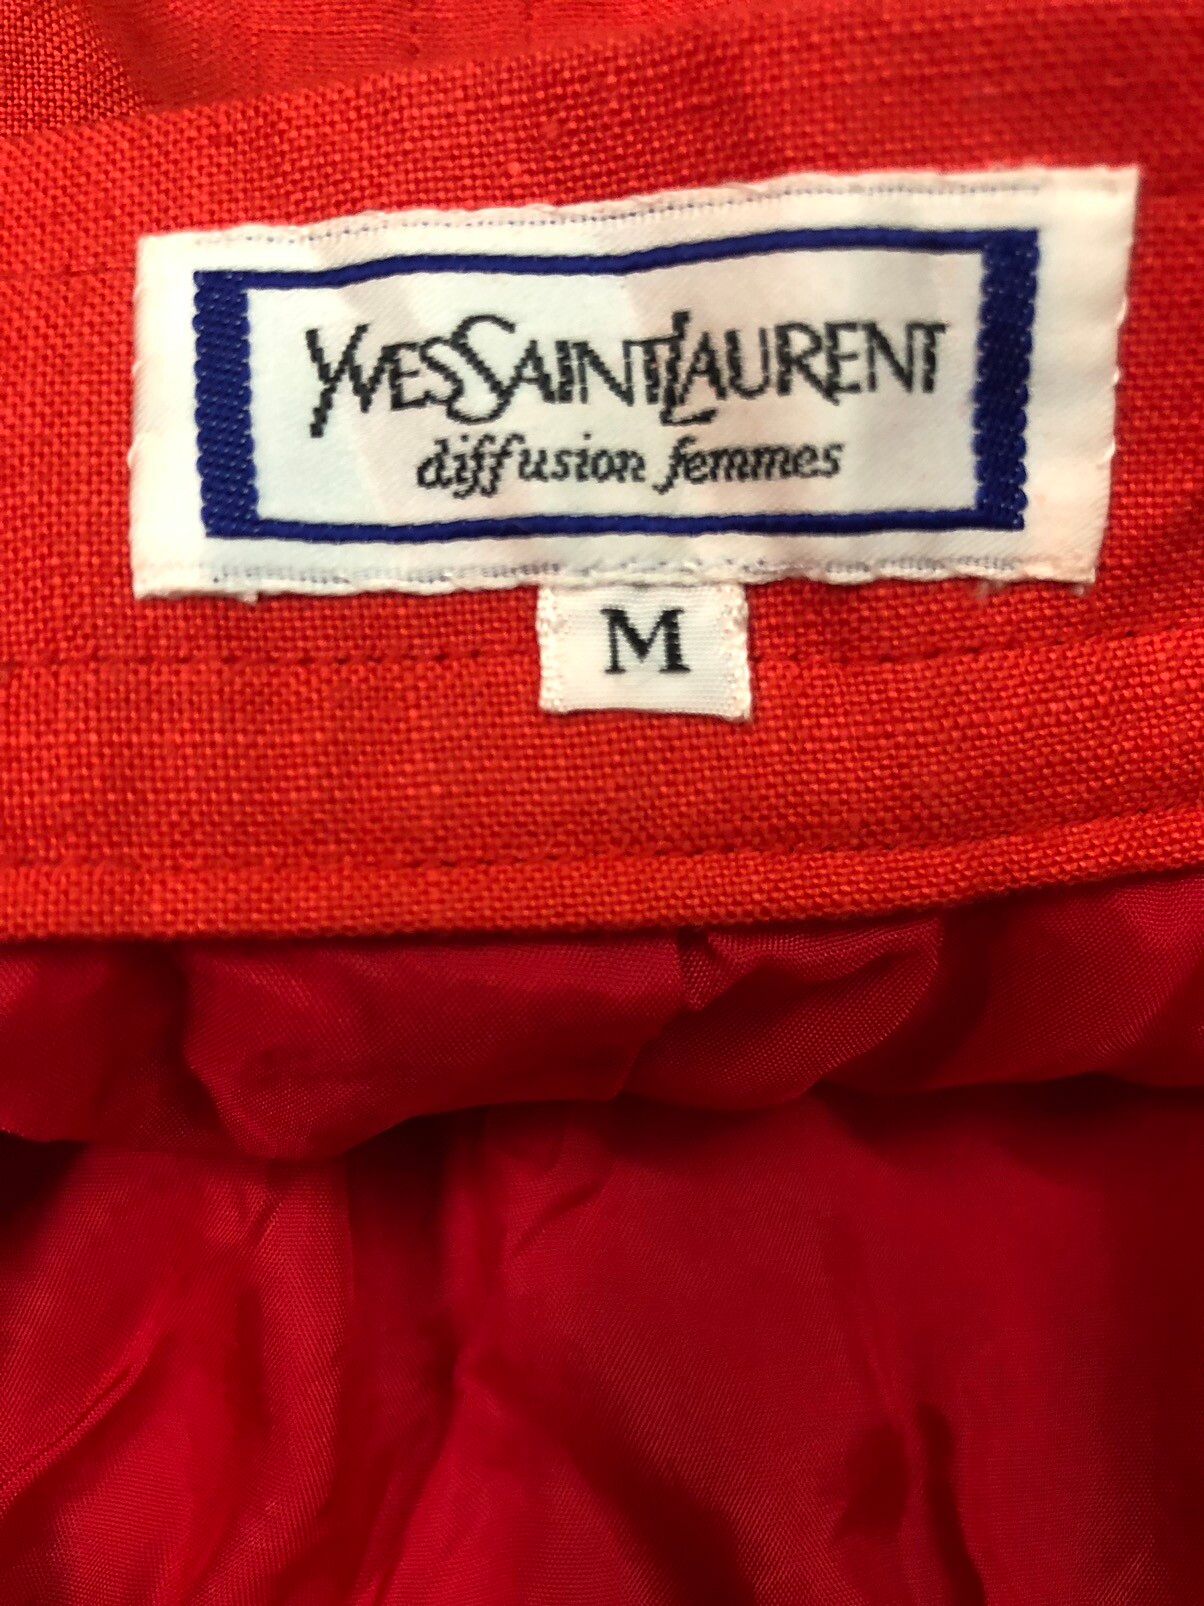 Vintage - Yves Saint Laurent Diffusion Femmes Skirt - 3